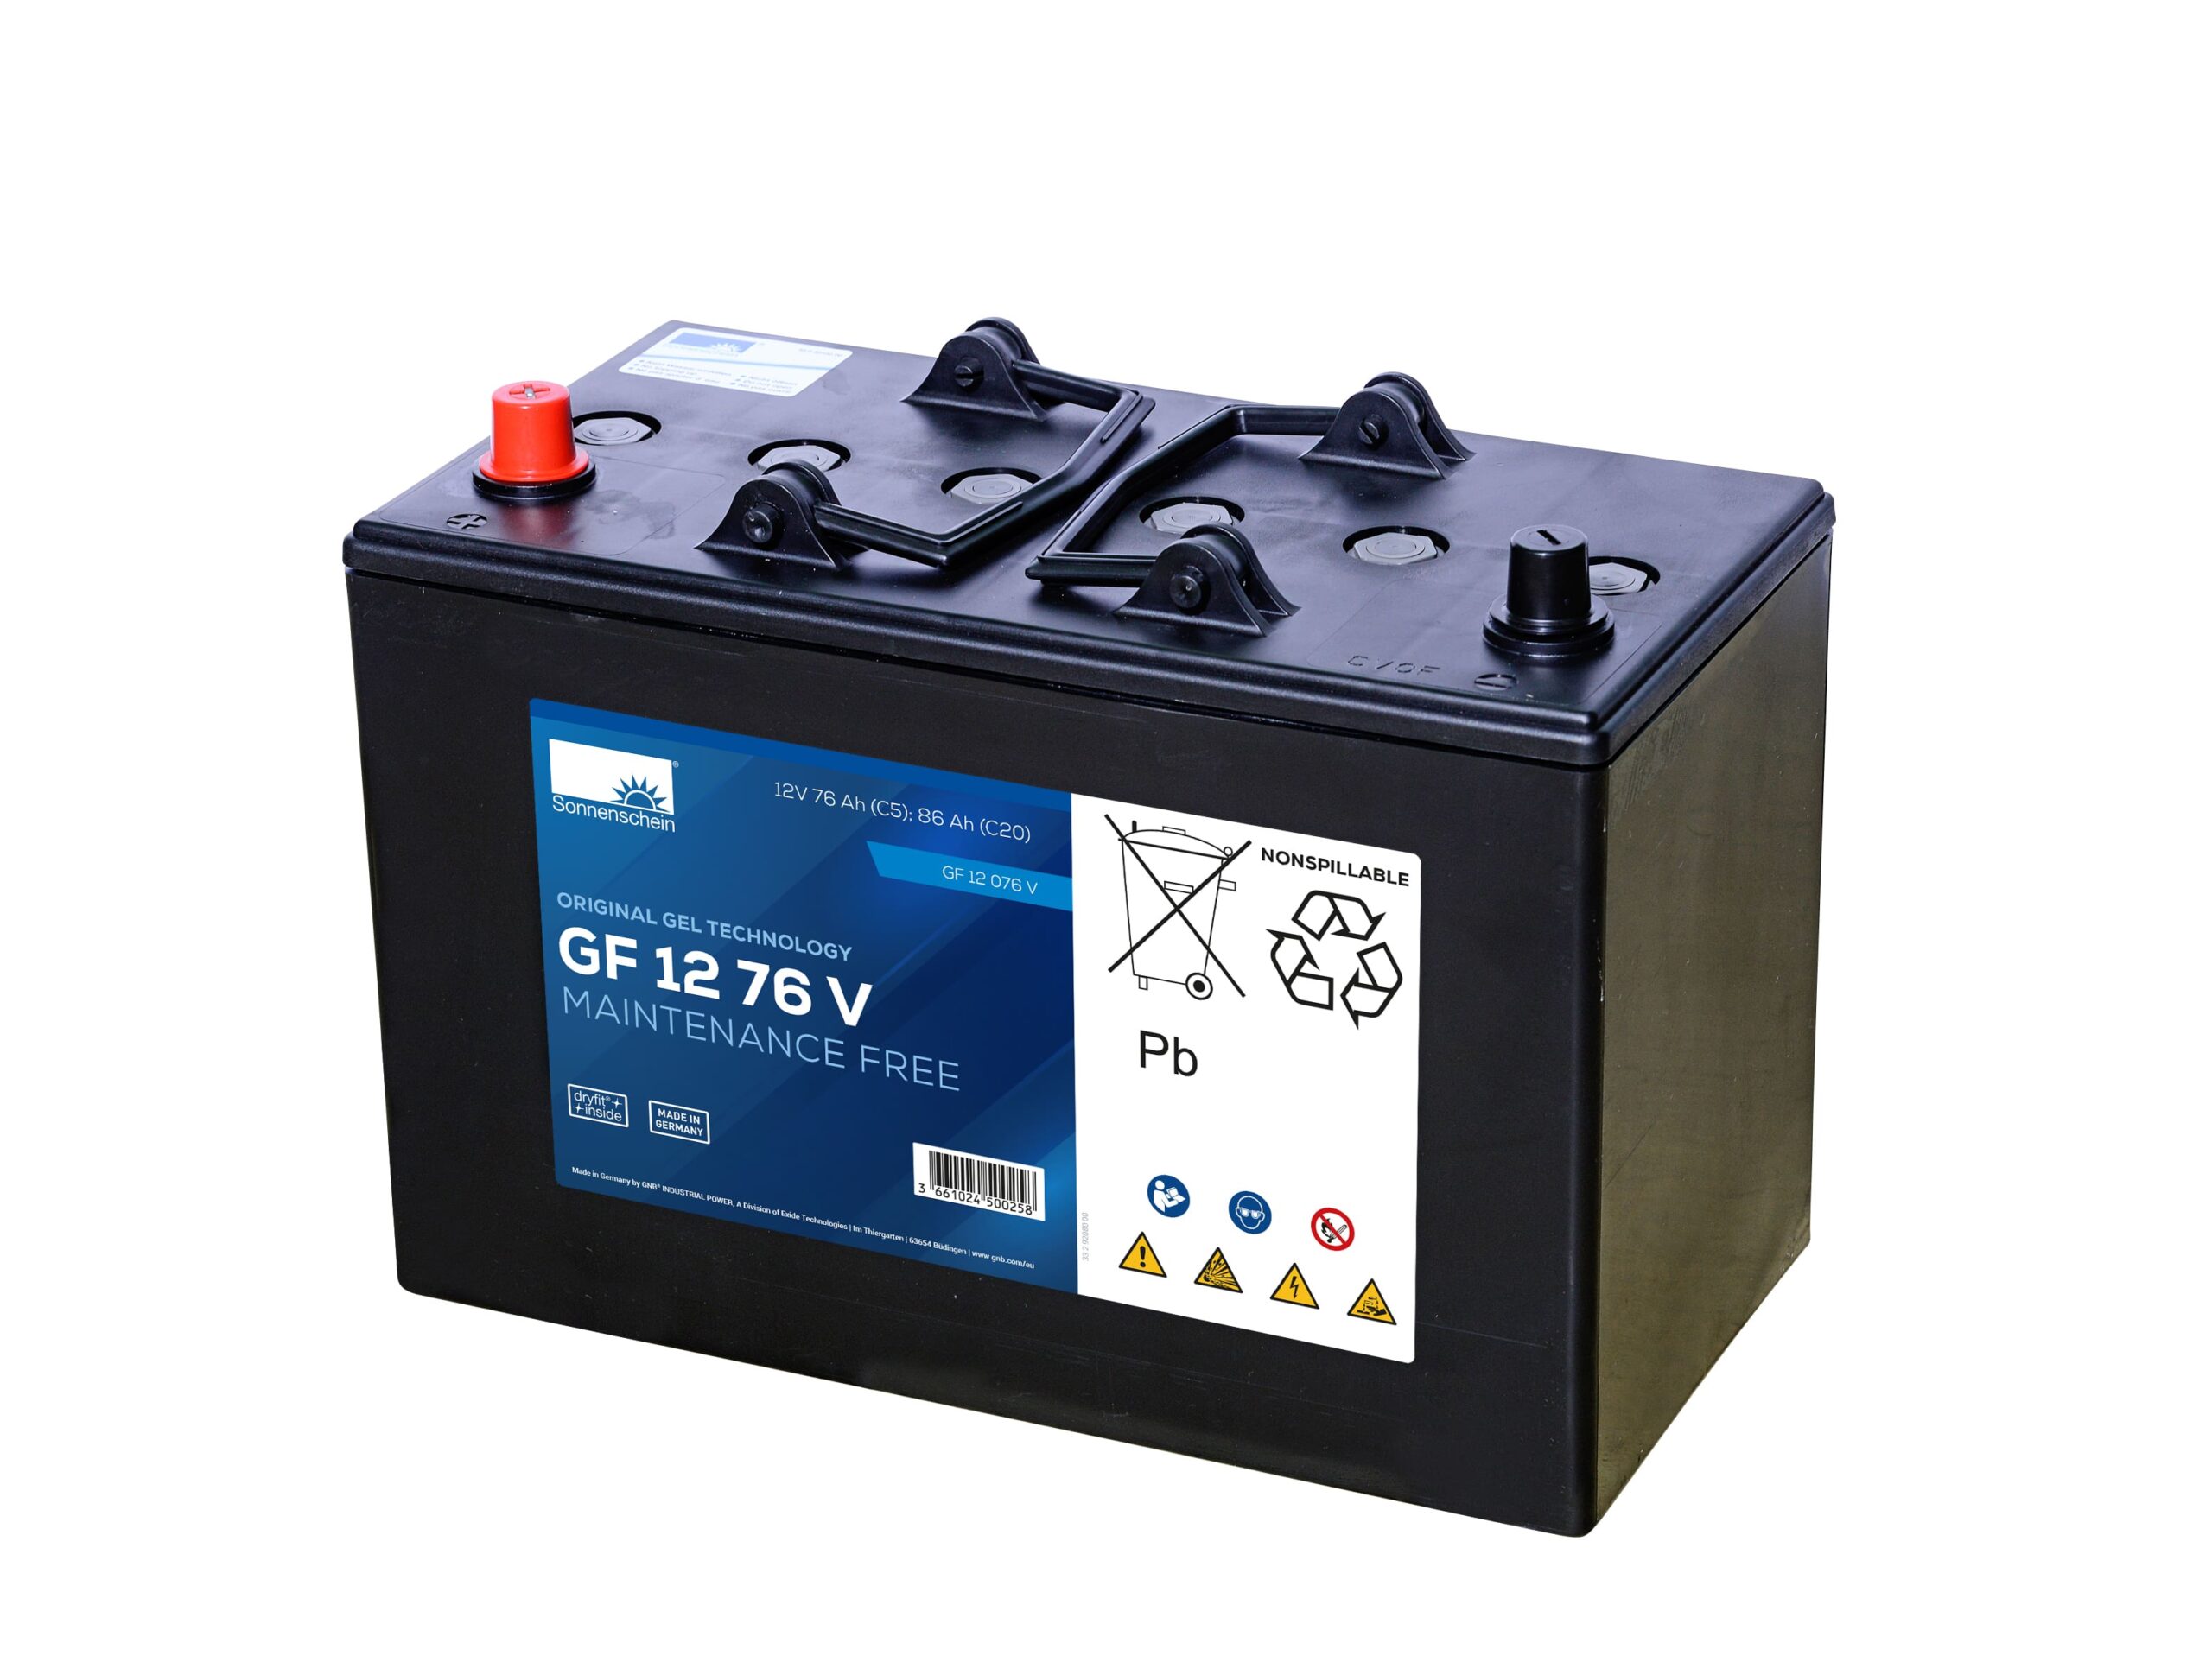 Varta Batterie-Ladegerät 7000 Plus (Geeignet für: AGM-/Gel-/Blei